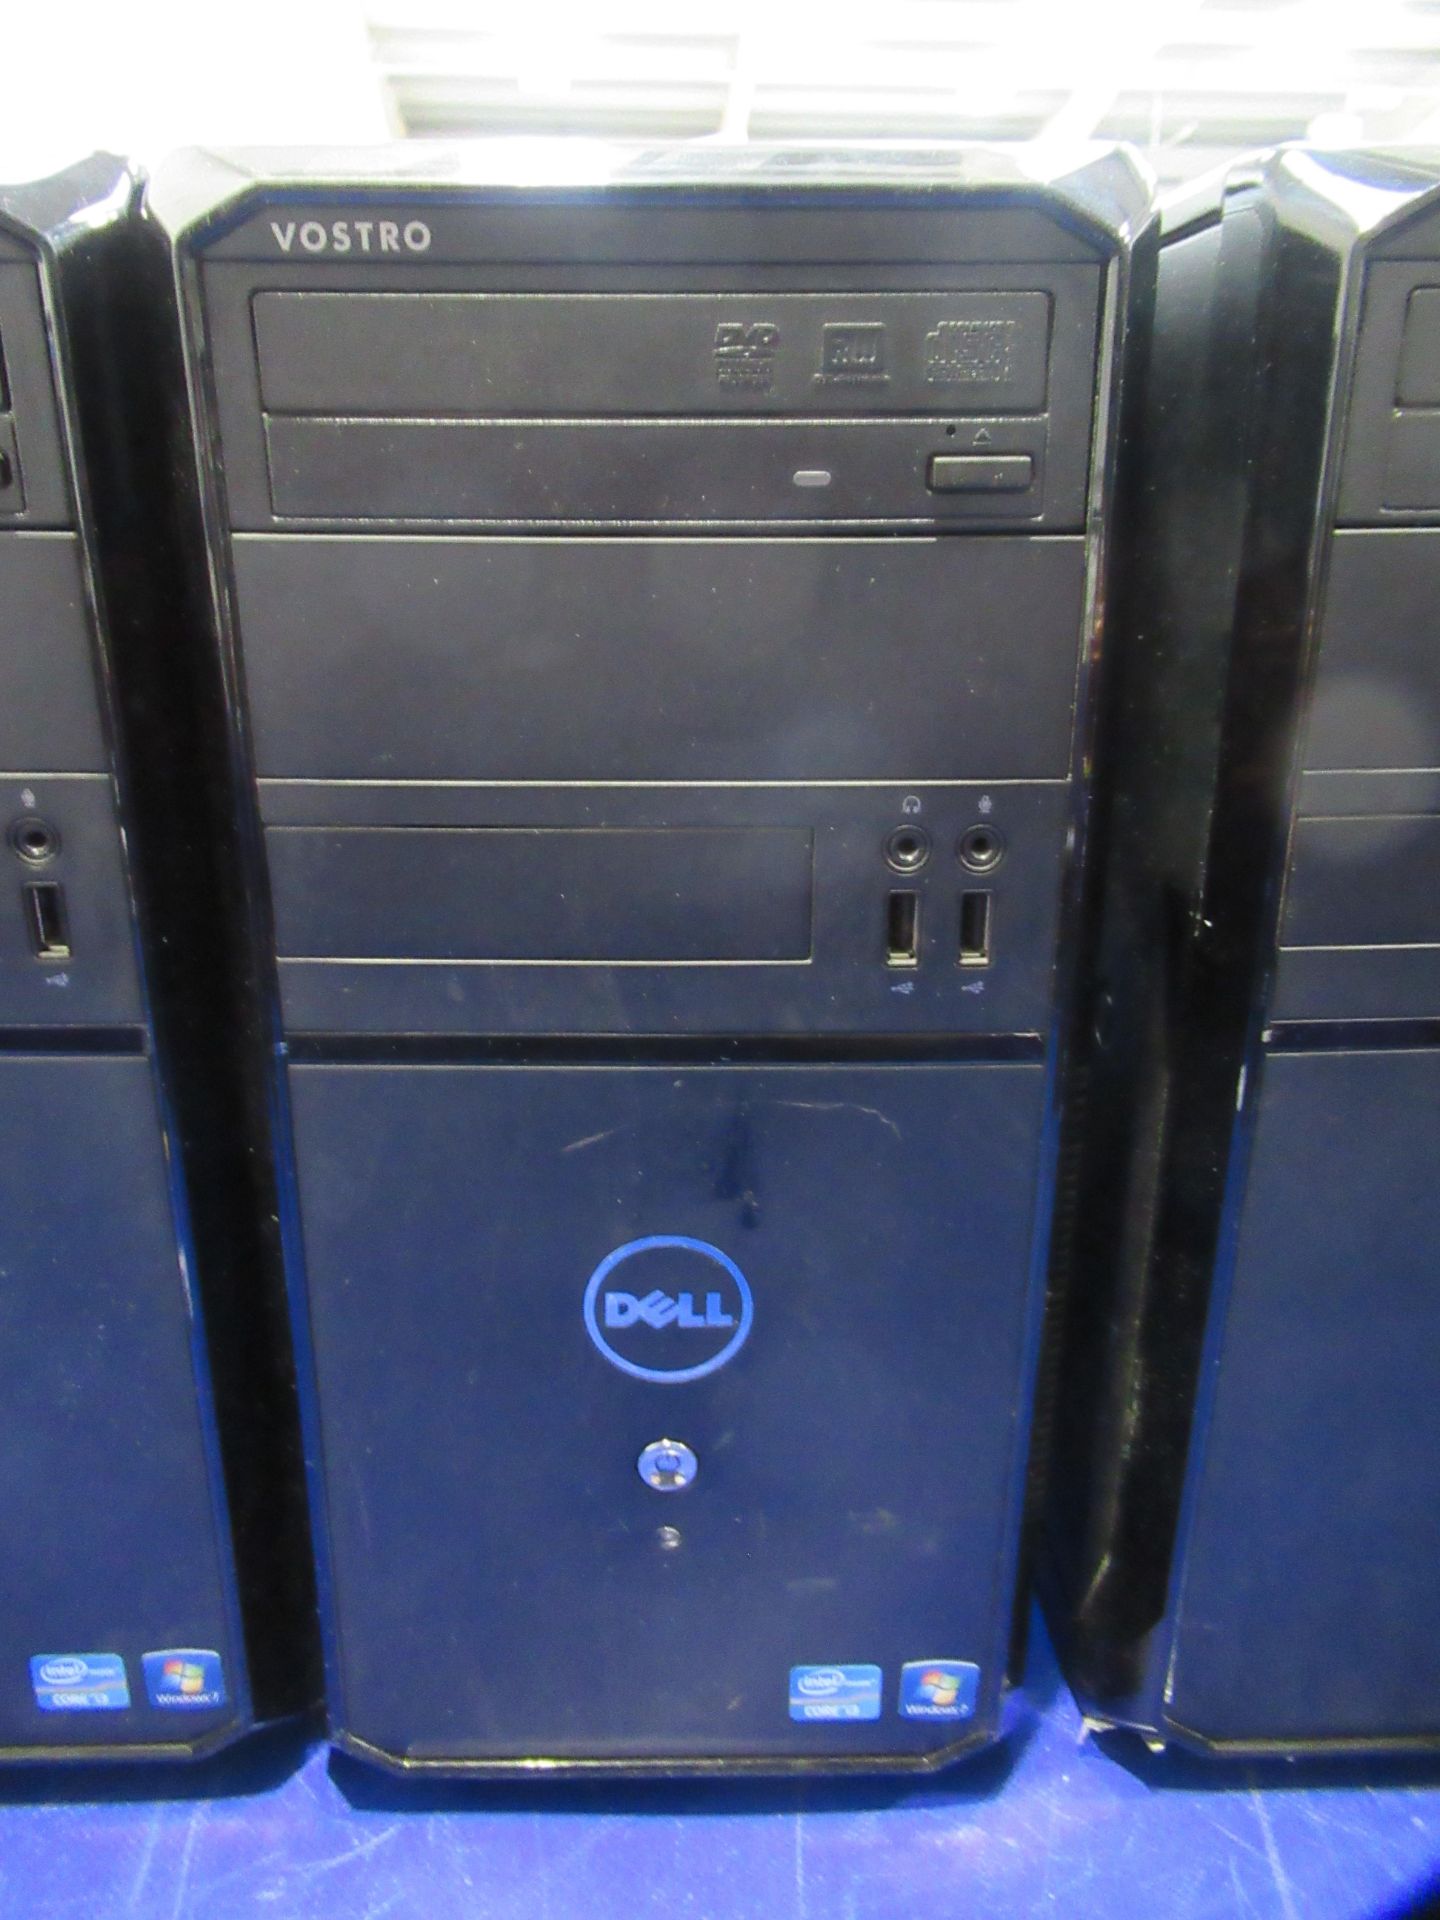 3x Dell Vostro 270 PC's- no power cables - Image 4 of 7